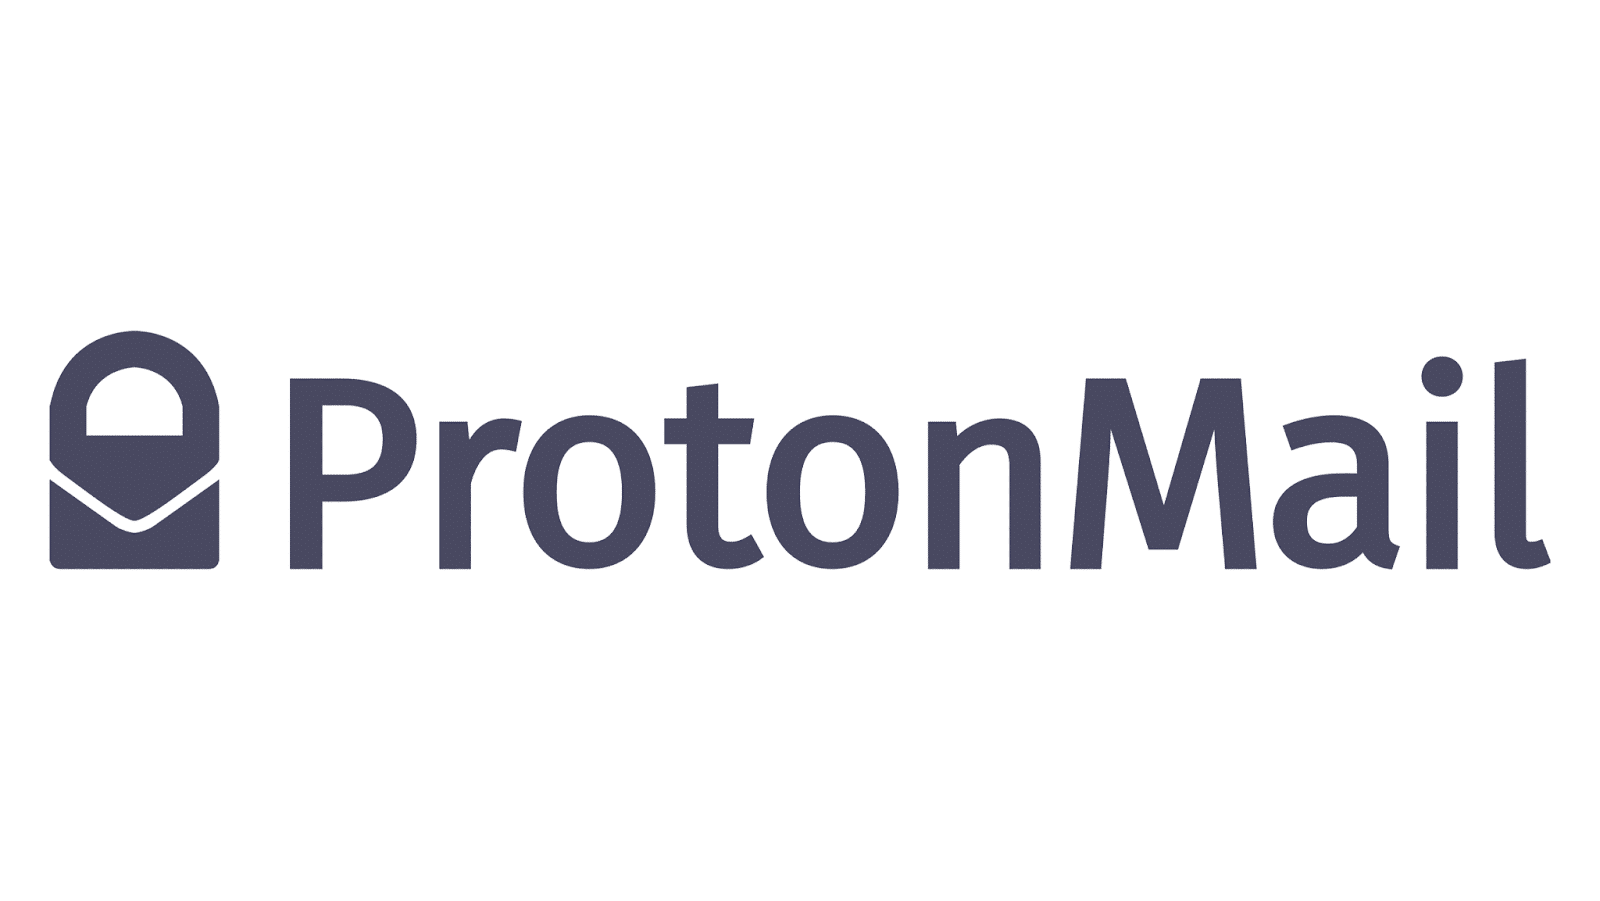 The ProtonMail logo